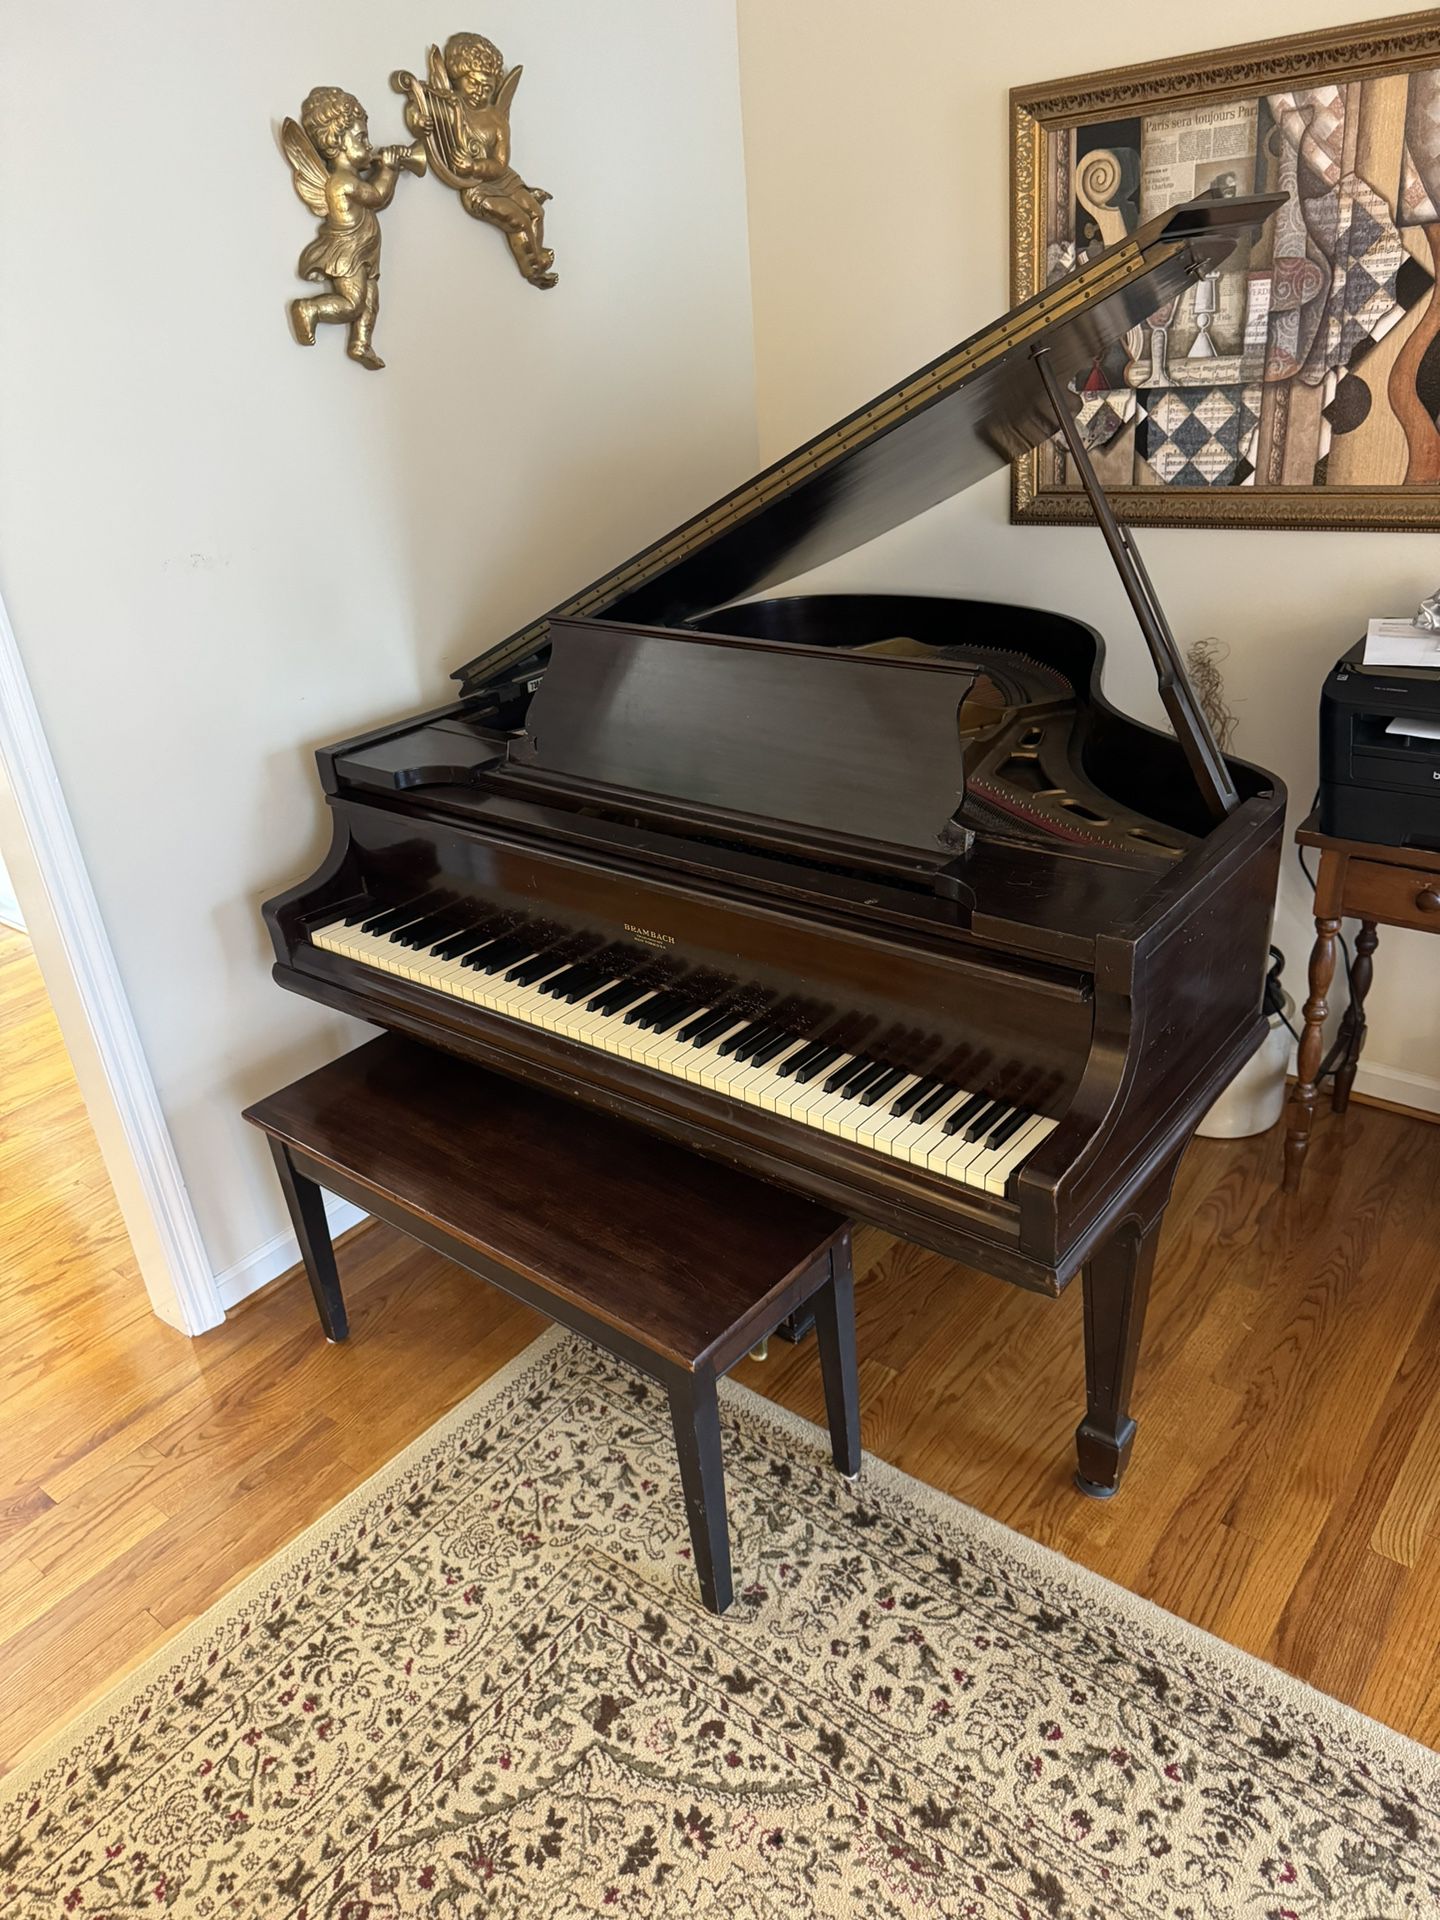 Brambach Piano 5'0" 1(contact info removed)